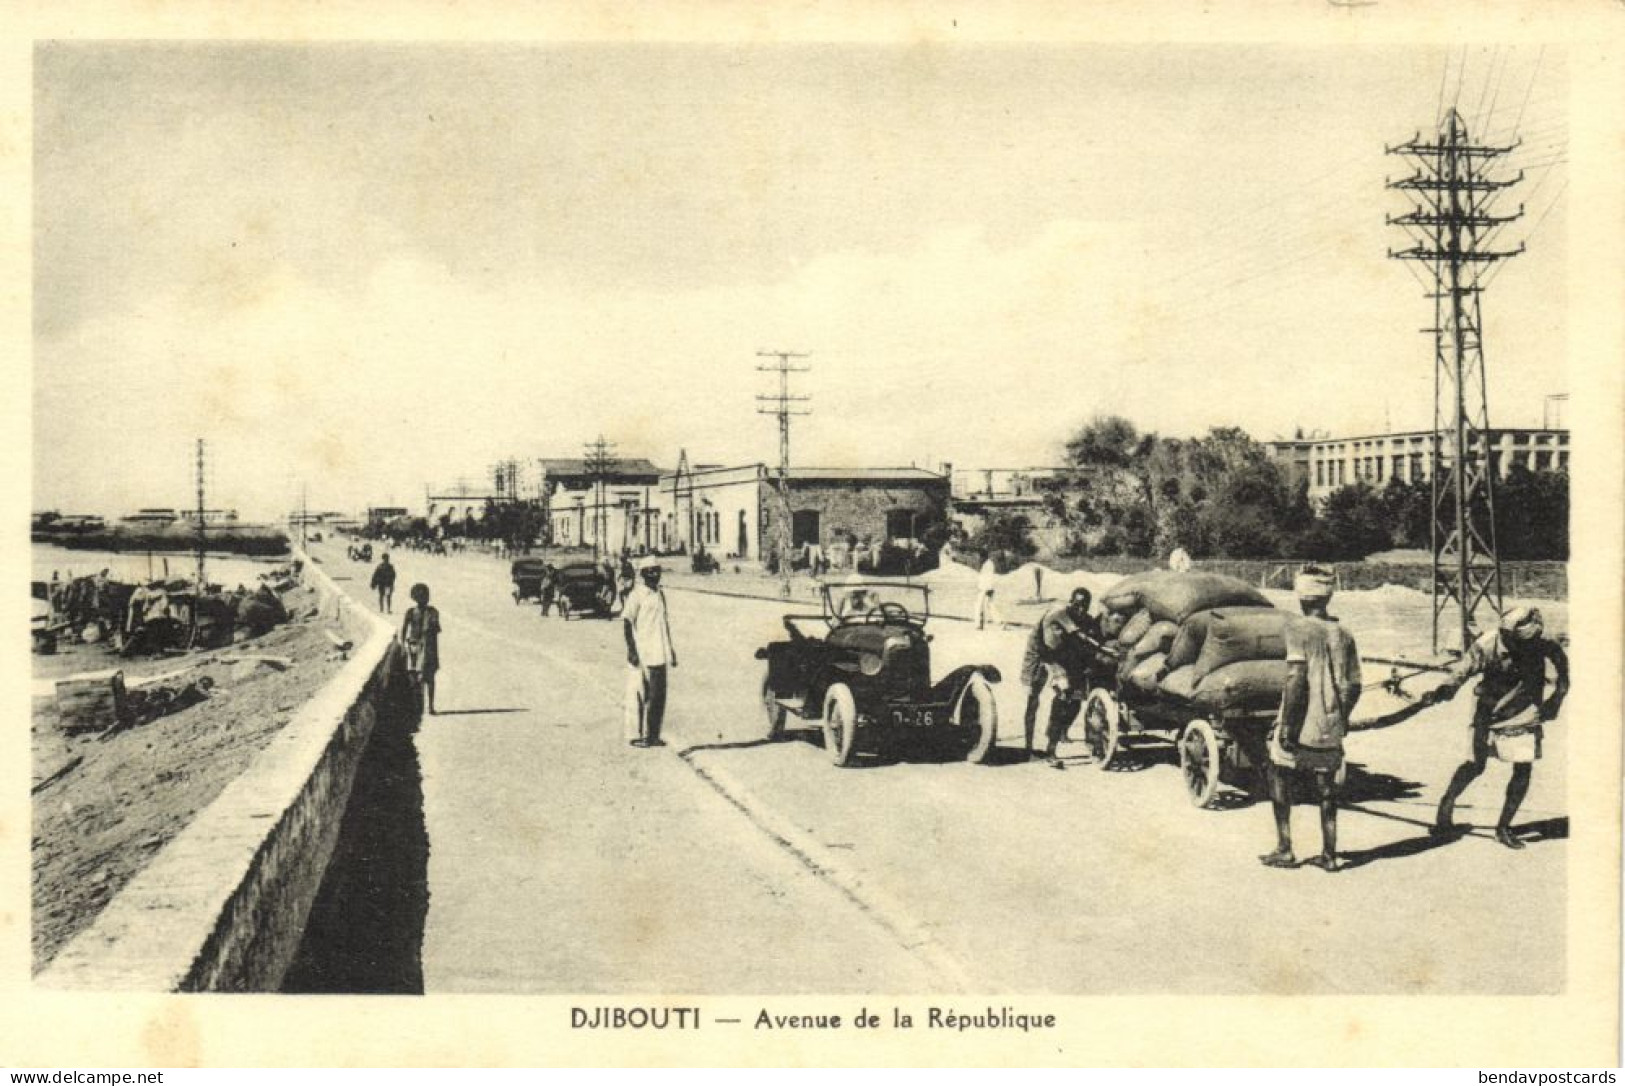 Djibouti, DJIBOUTI, Avenue De La République, Old Car, Cart (1930s) Postcard (1) - Djibouti